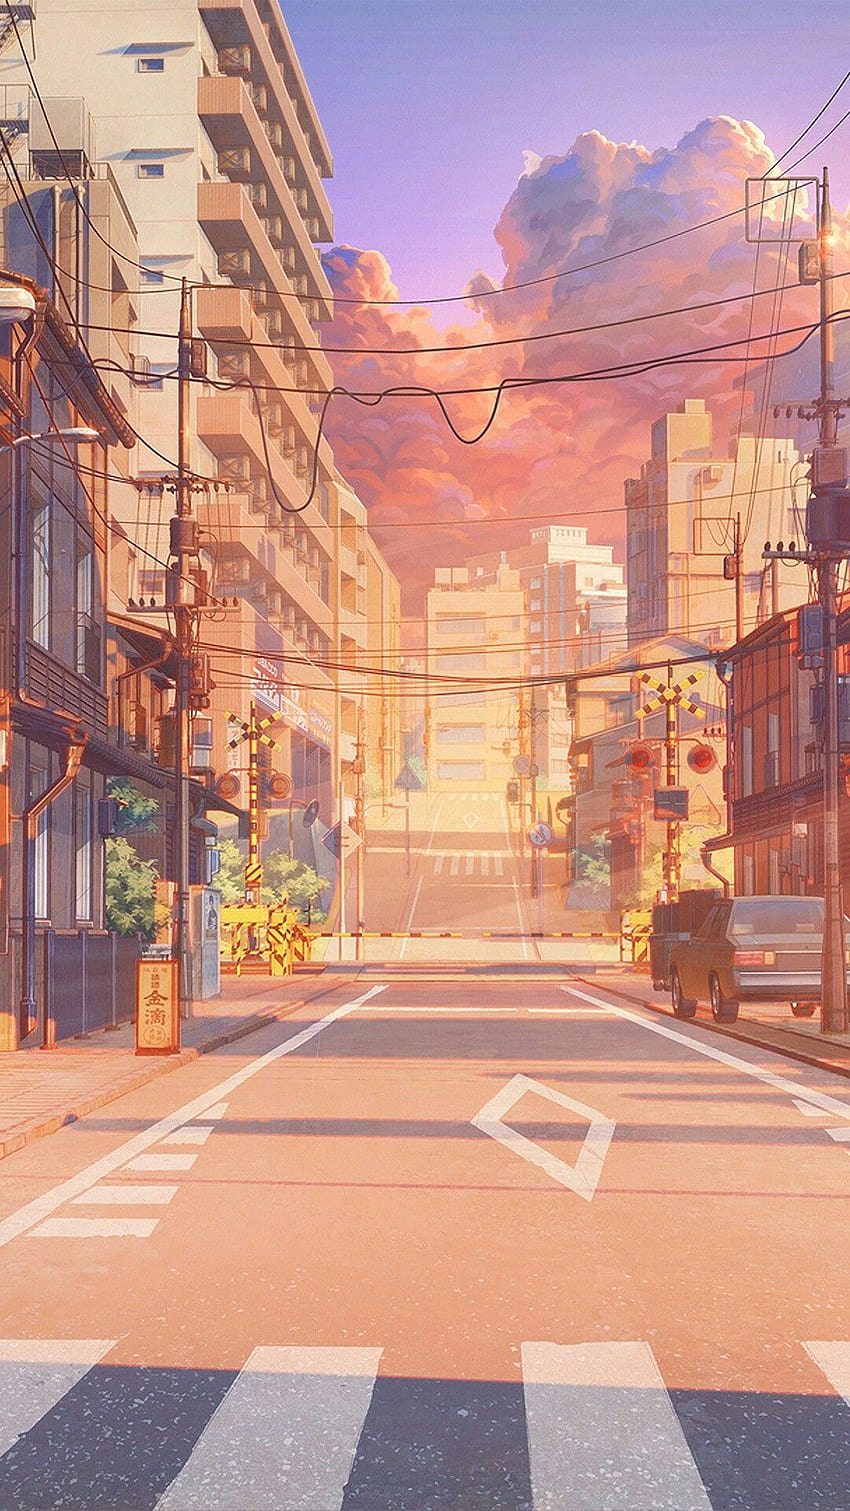 Anime Street, jalan kota anime Jepang wallpaper ponsel HD